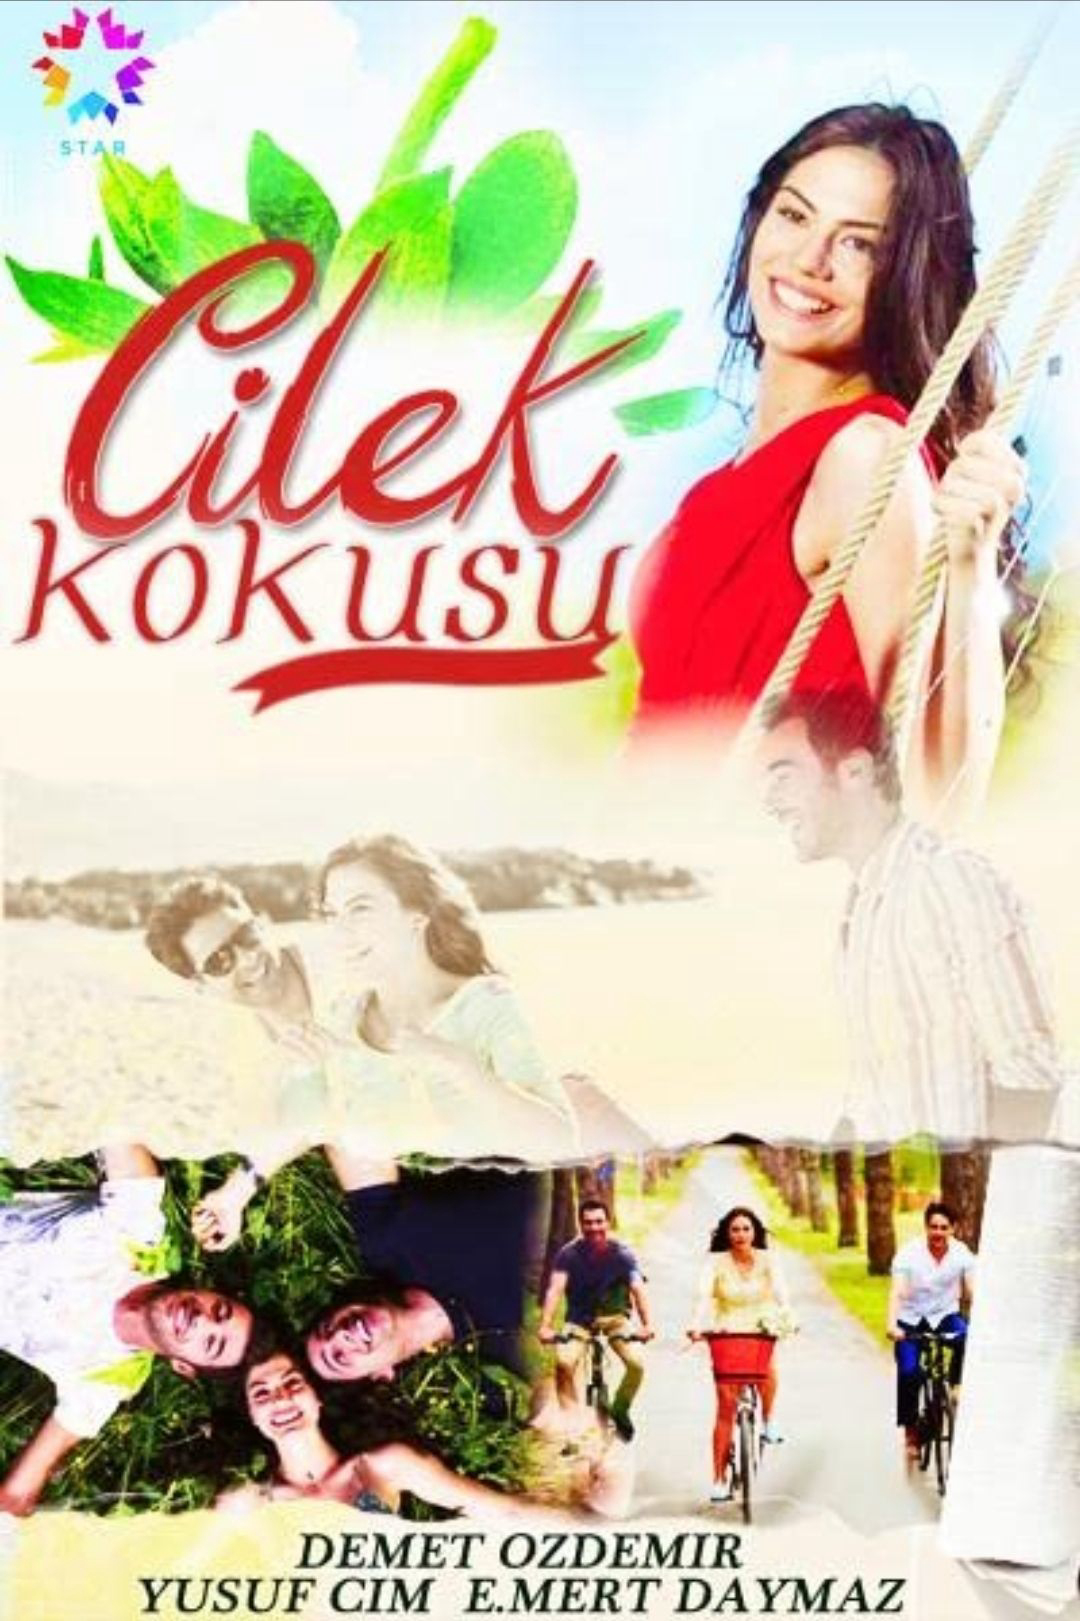 Poster Phim Cilek Kokusu (Strawberry Smell)